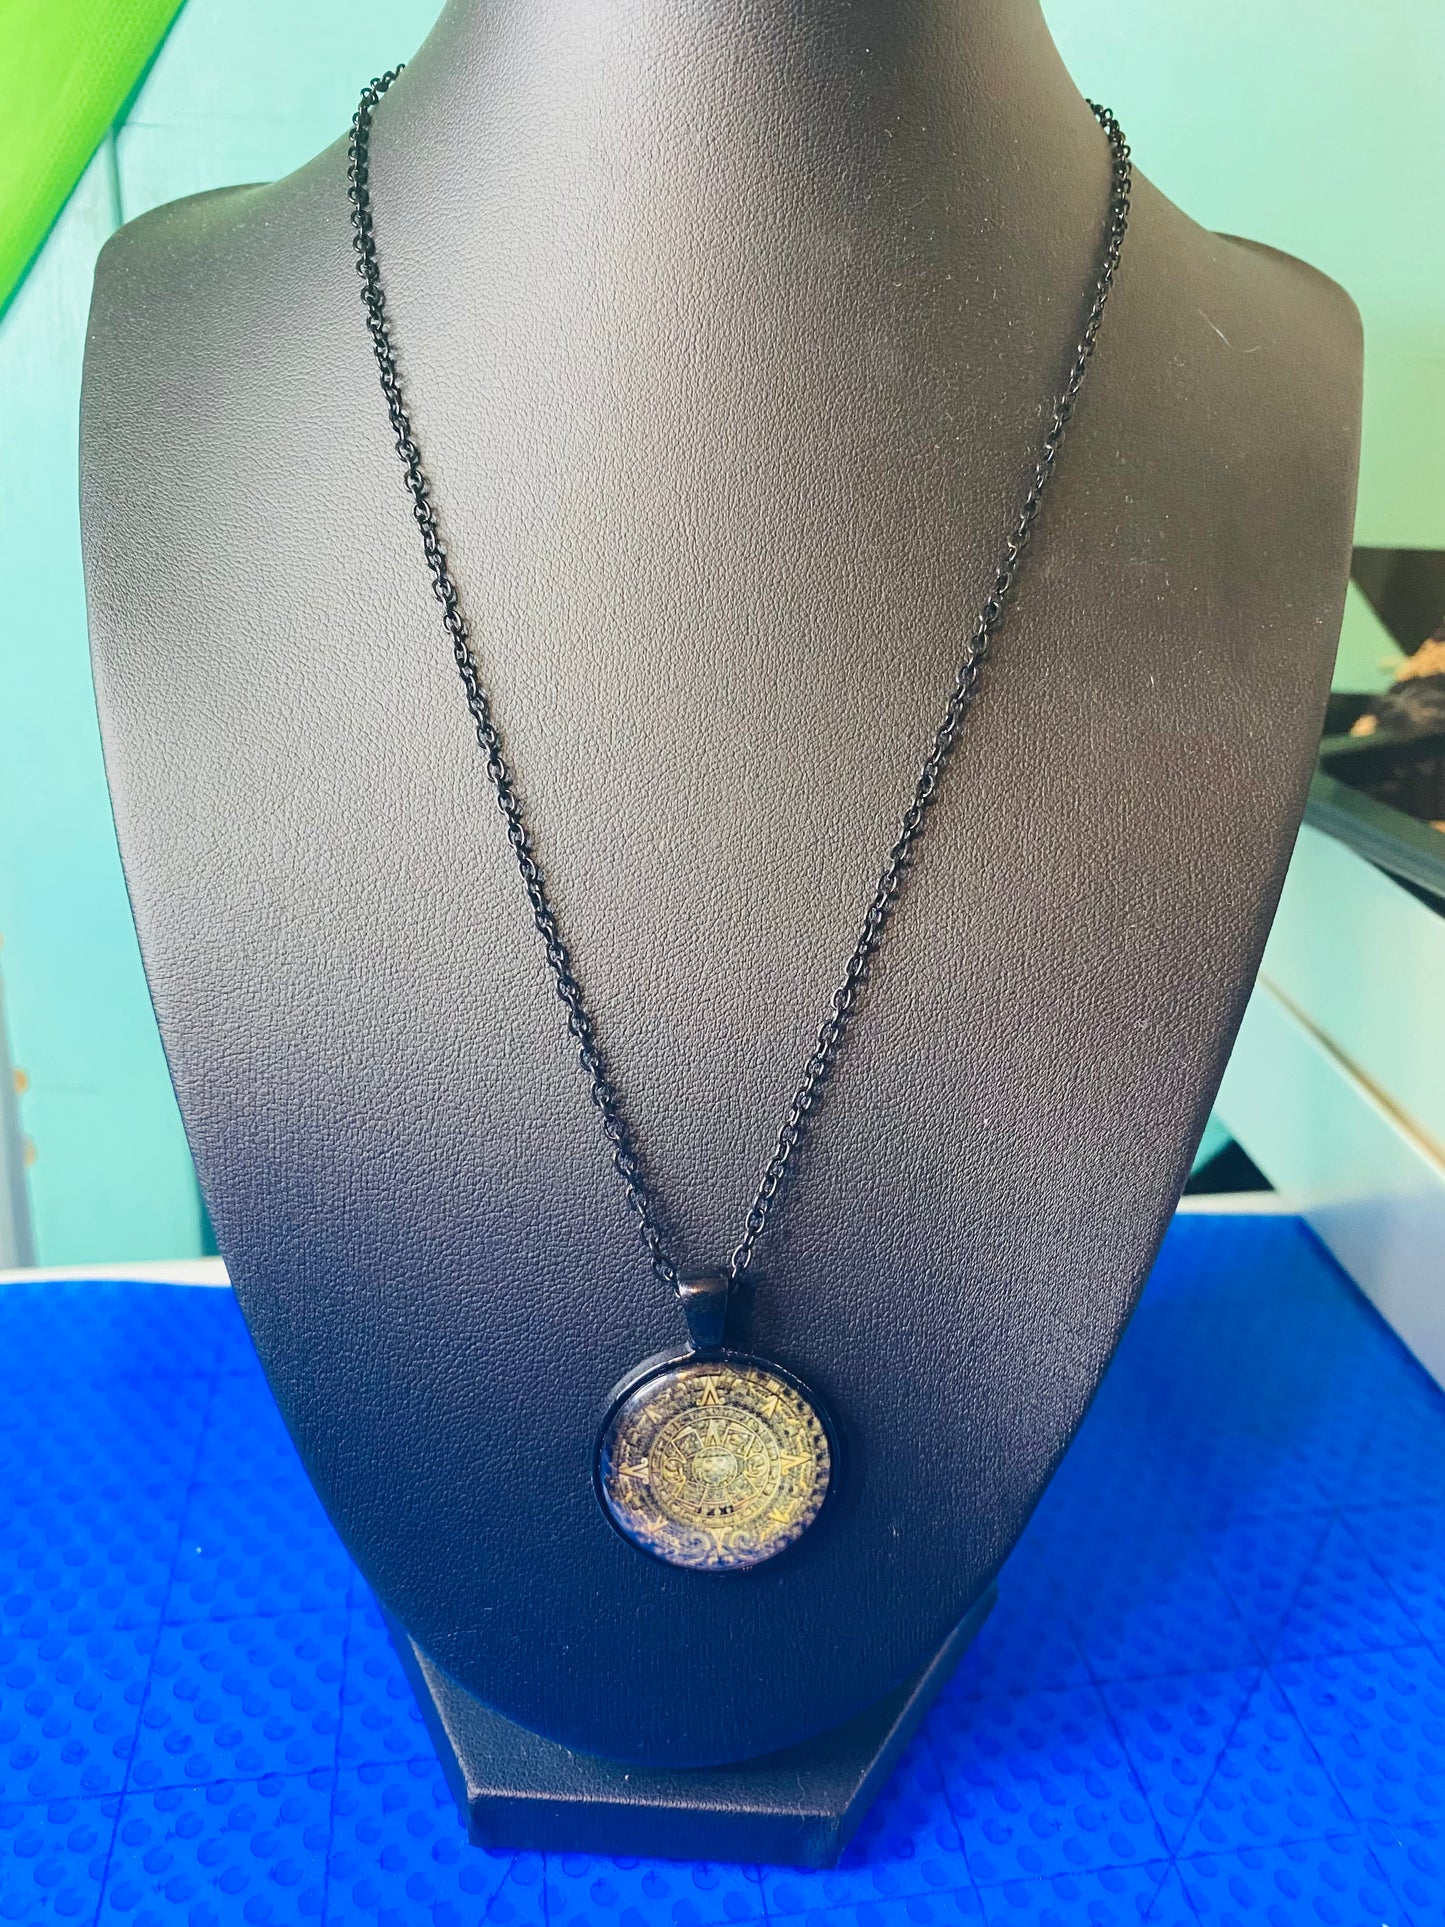 Mayan calendar resin pendant necklace